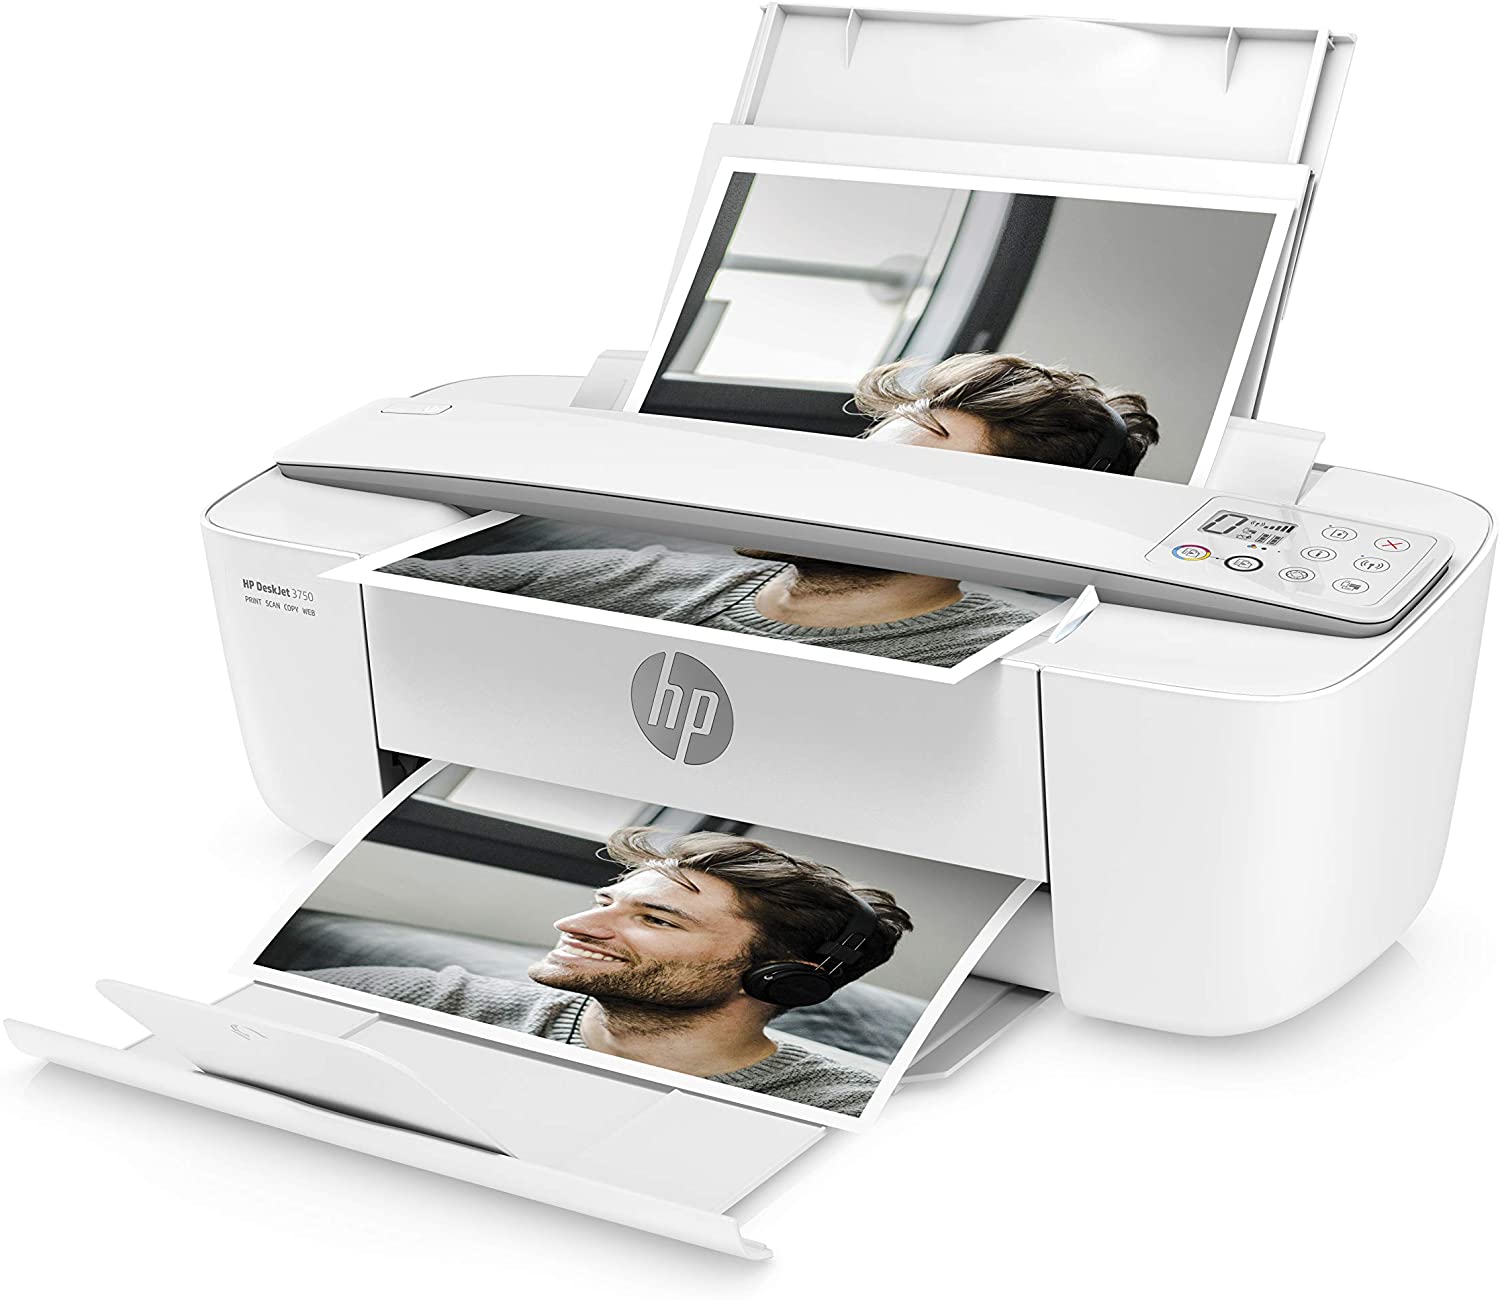 Imprimante multifonction couleur Wi-Fi HP DeskJet 3750